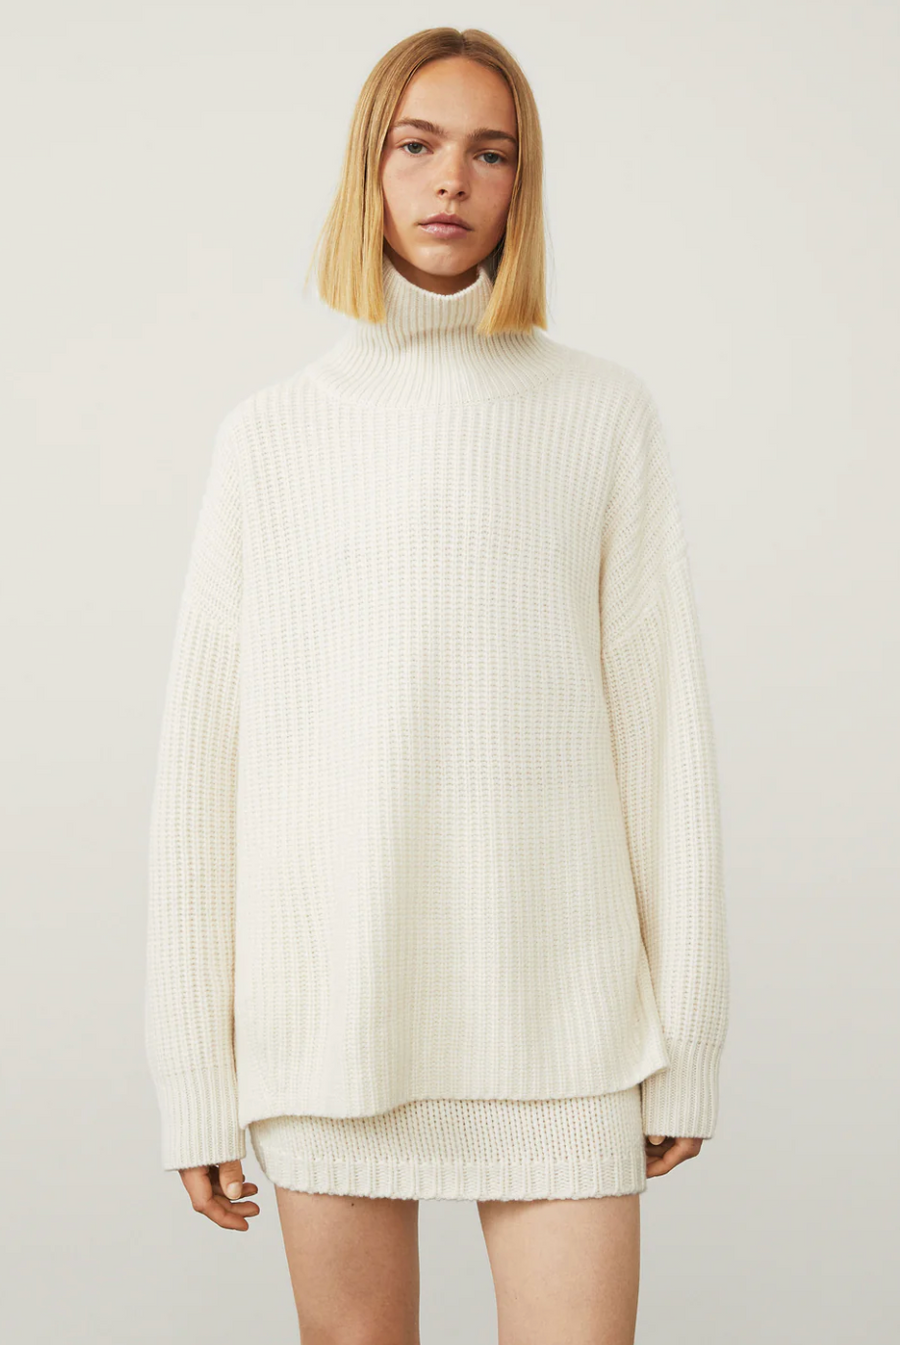 Therese Sweater - Cream